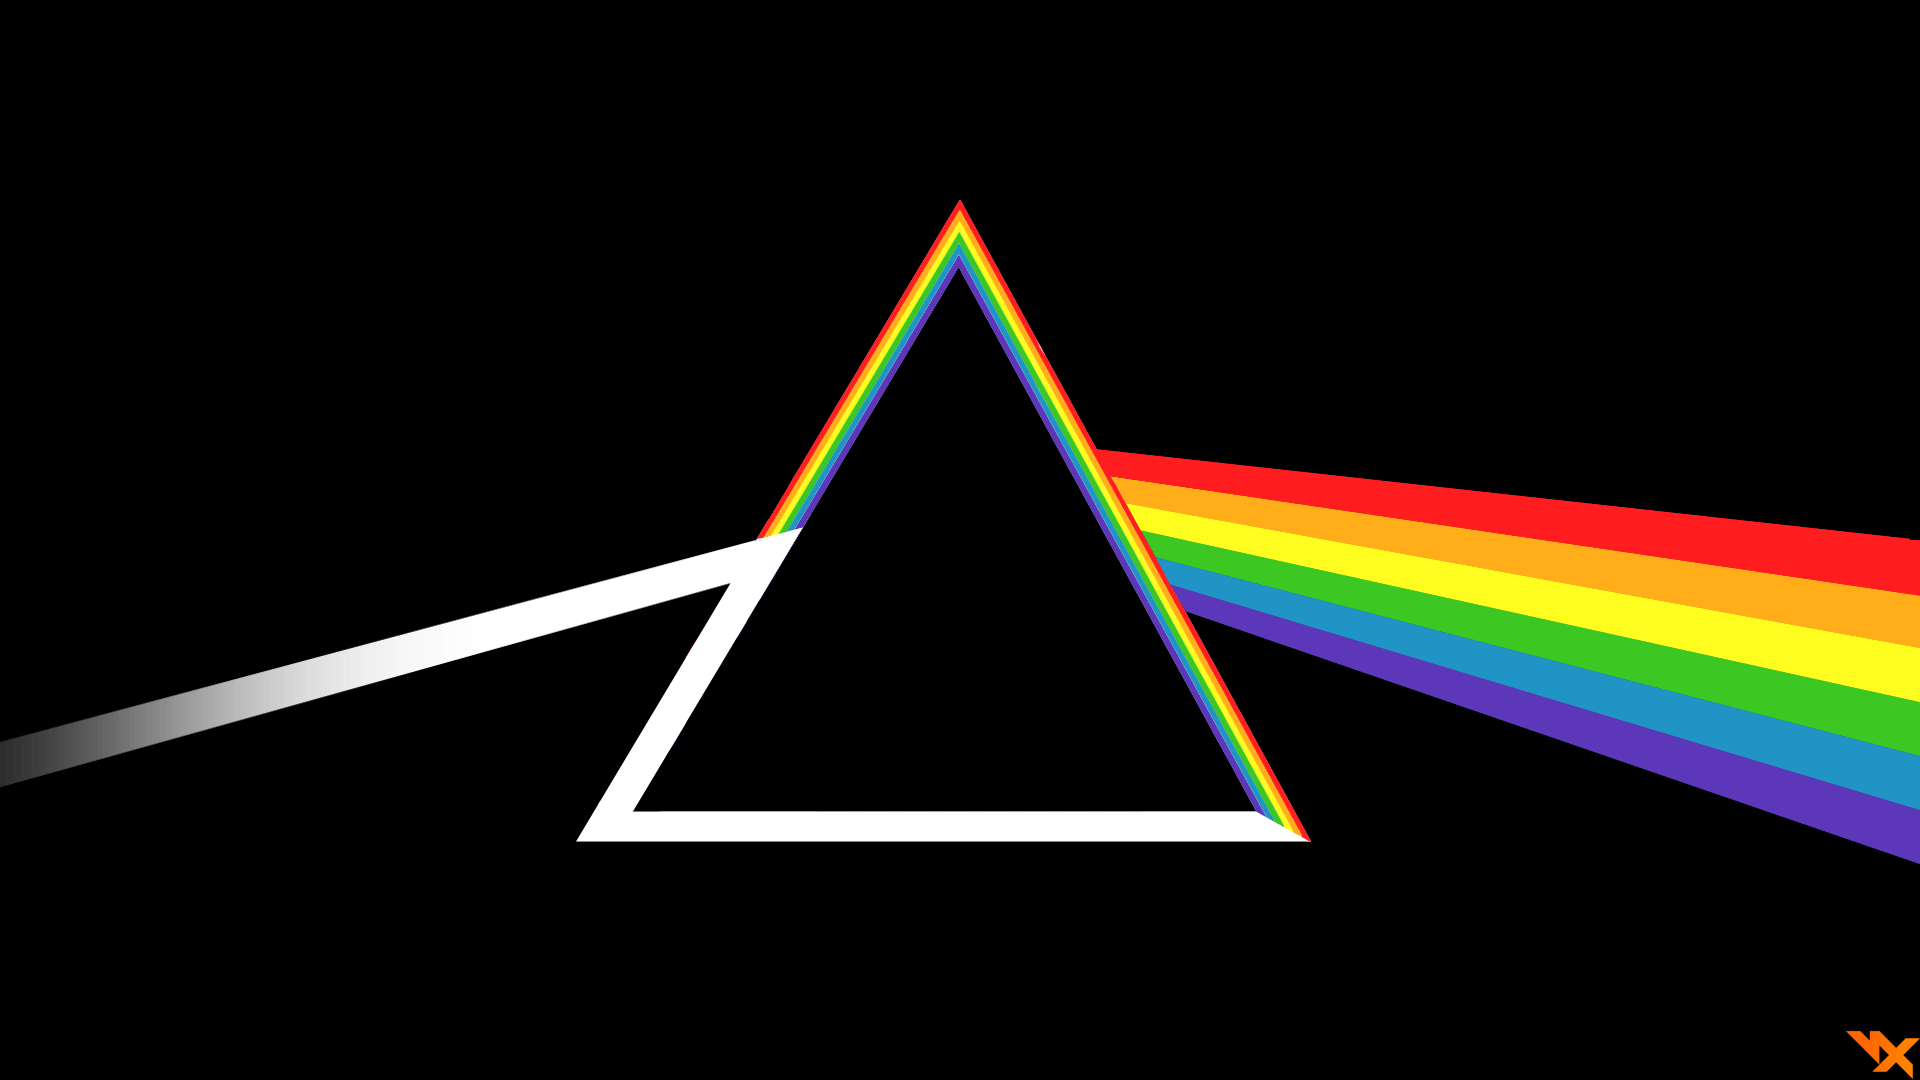 I Made A Simplistic Pink Floyd Pride Flag Wallpaper